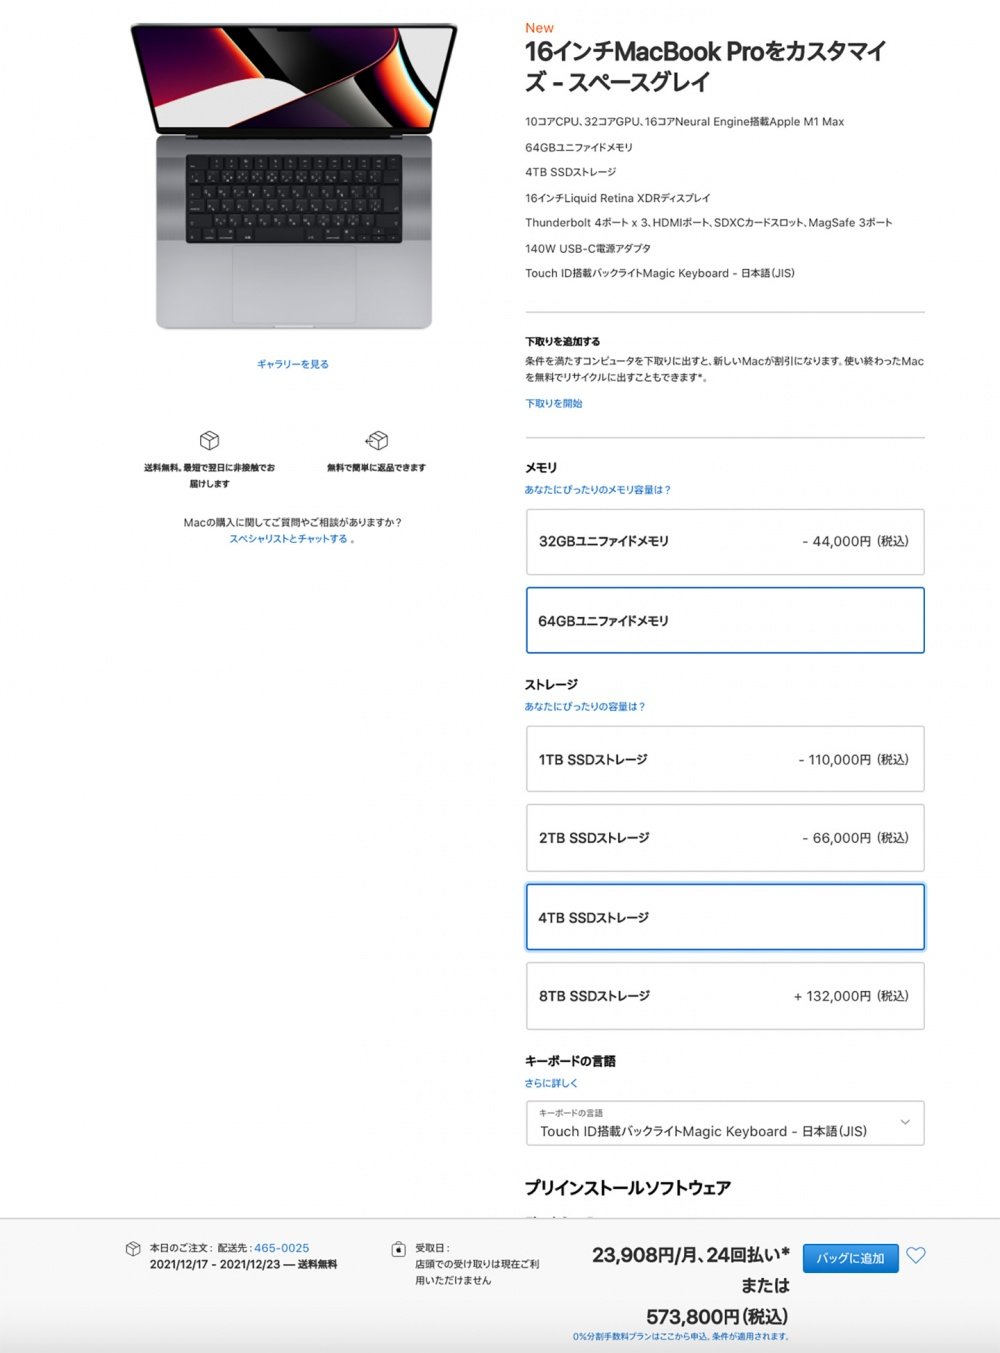 M1 Max搭載MacBook Pro「究極」モデル、Apple Storeが販売開始 - ITmedia NEWS